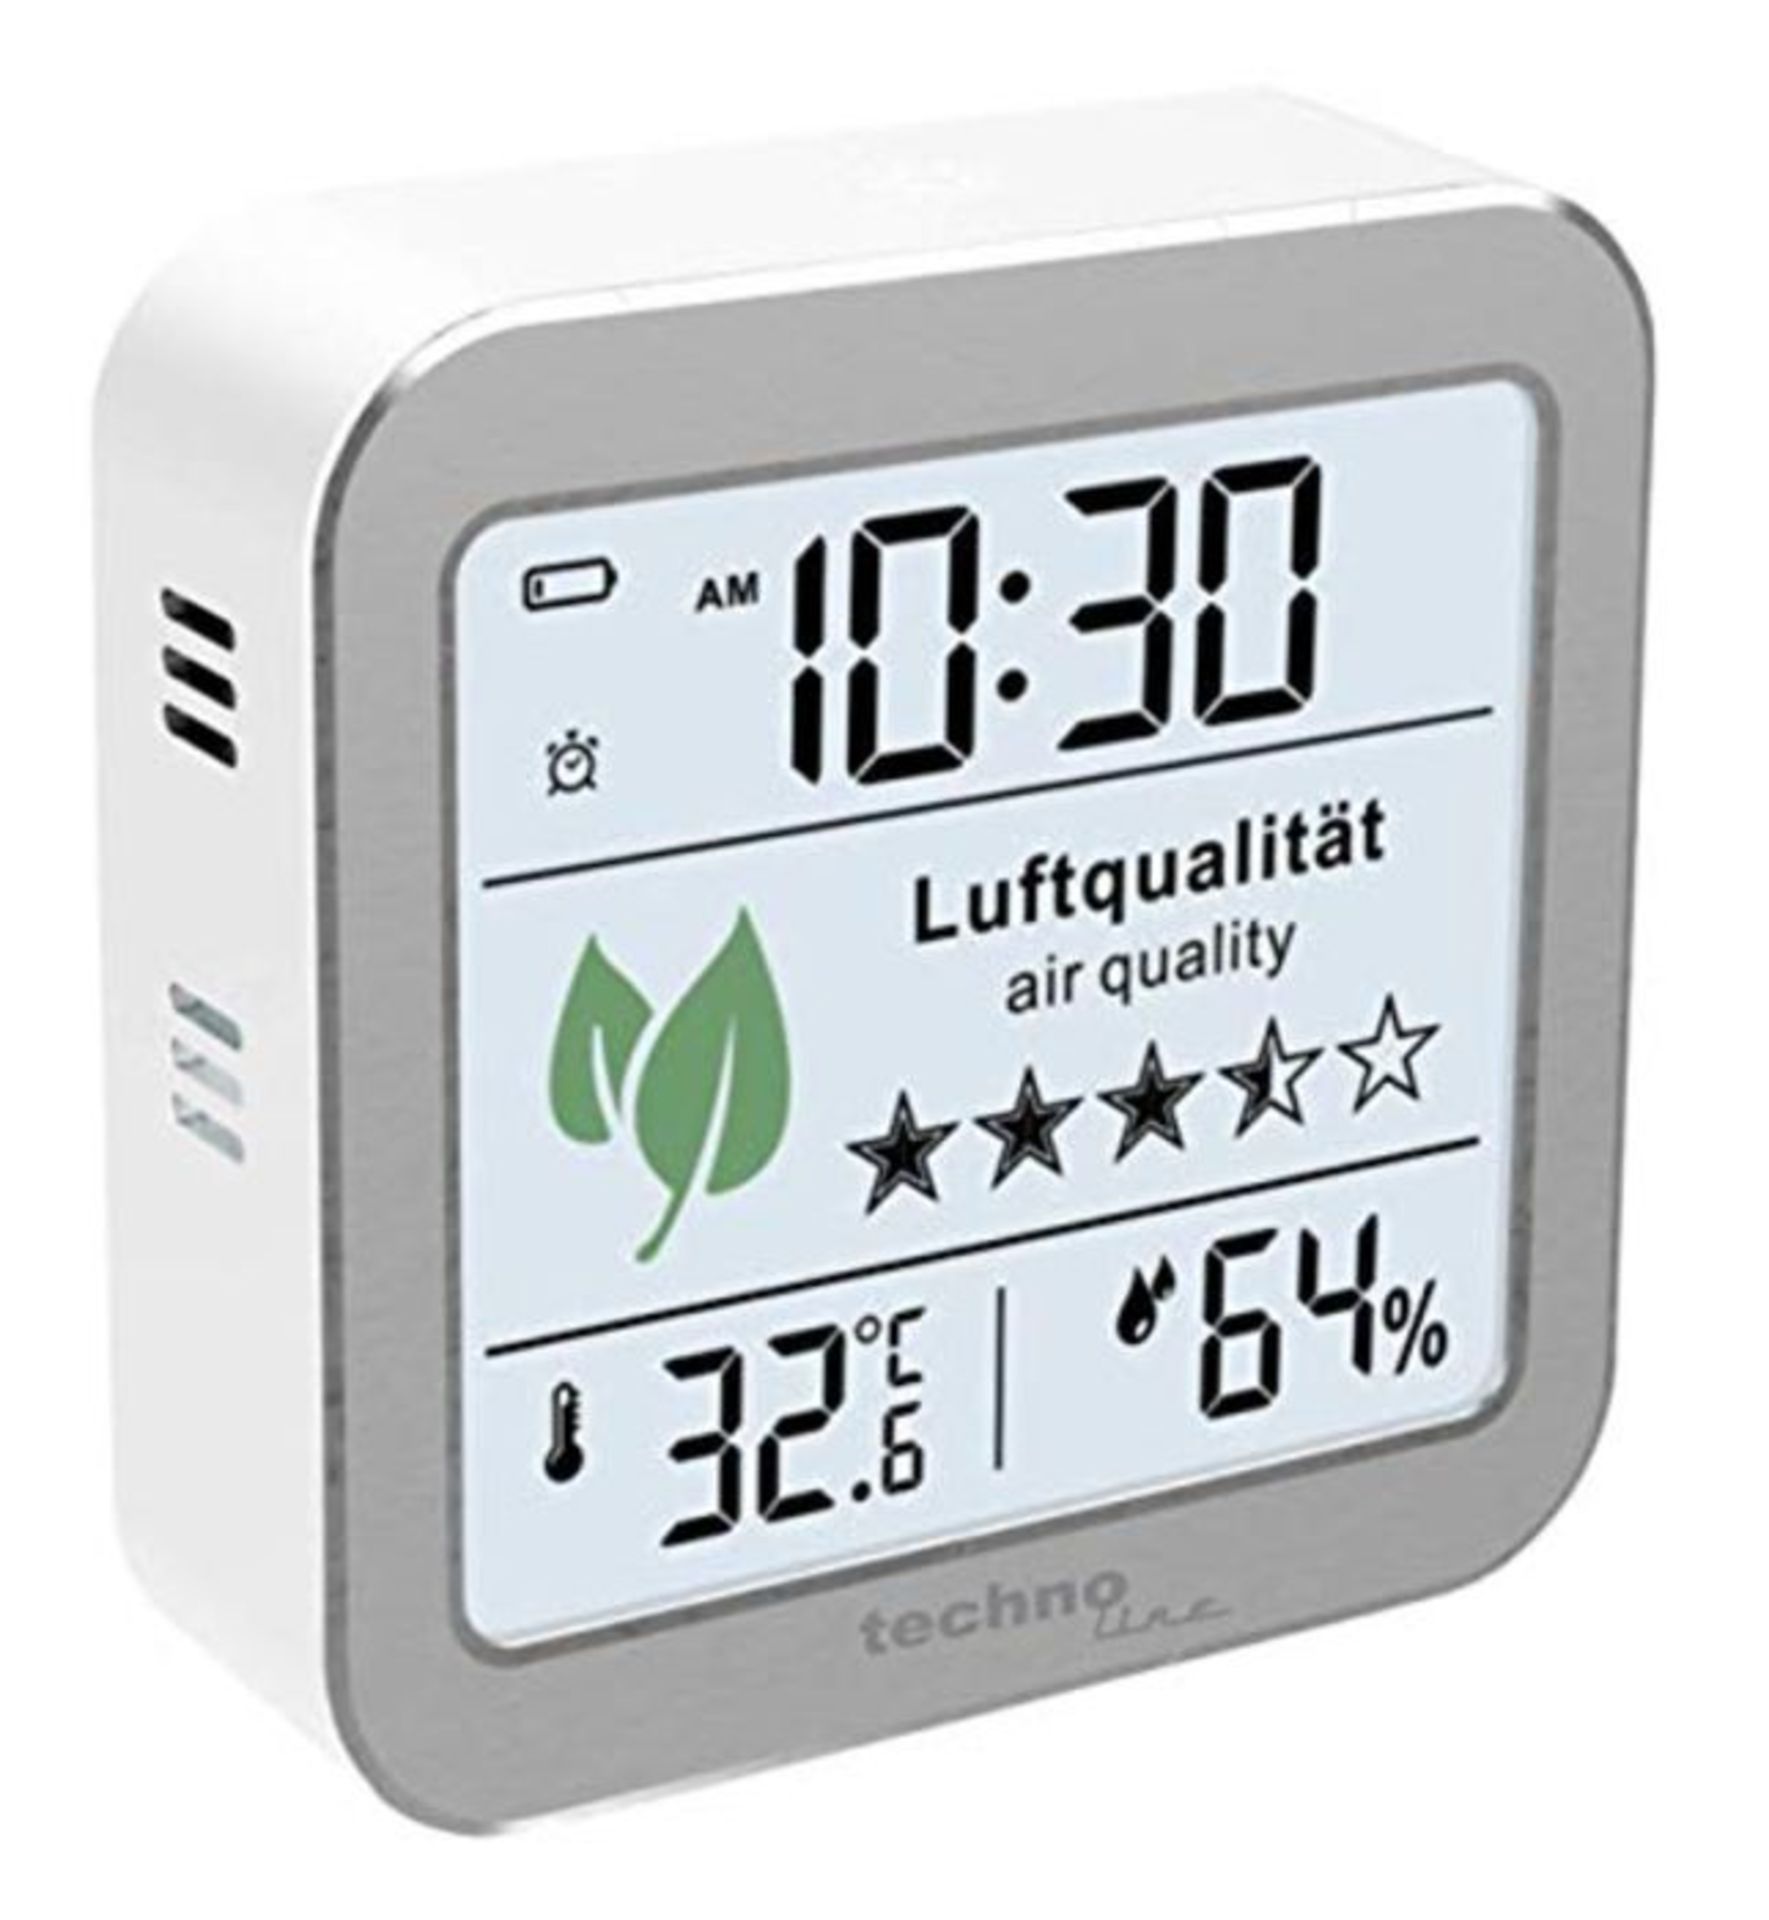 Technoline WL1020 Air Quality Monitor, Silver, White